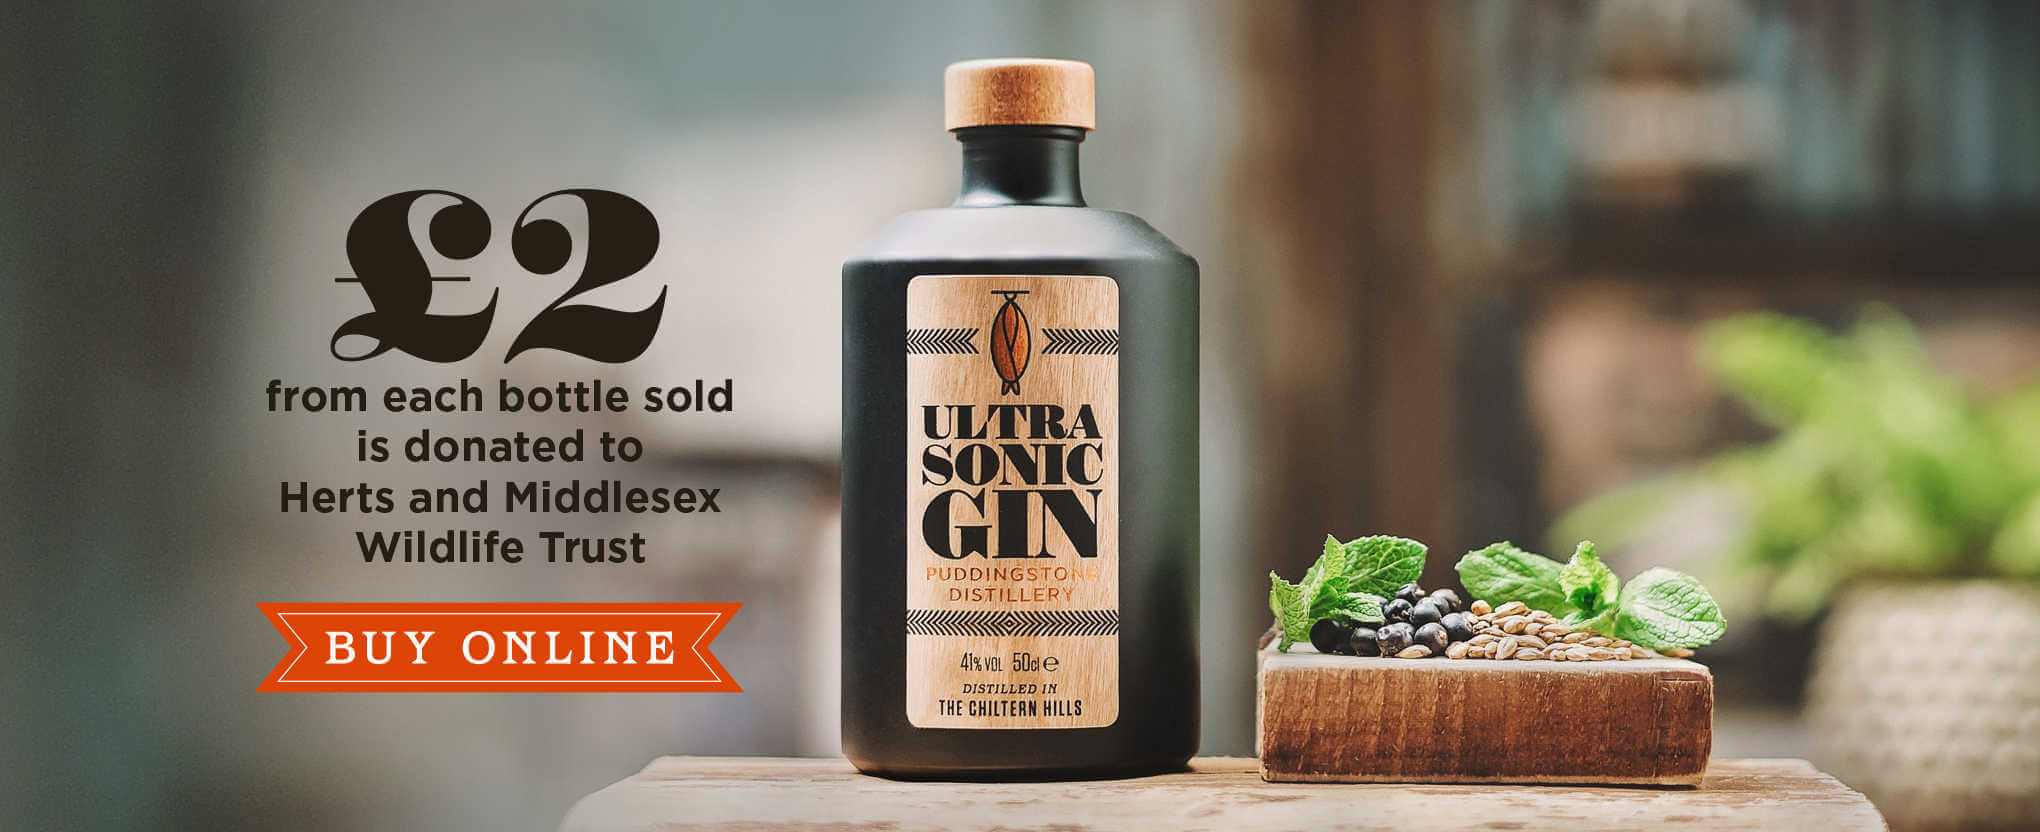 Buy Ultrasonic Gin header